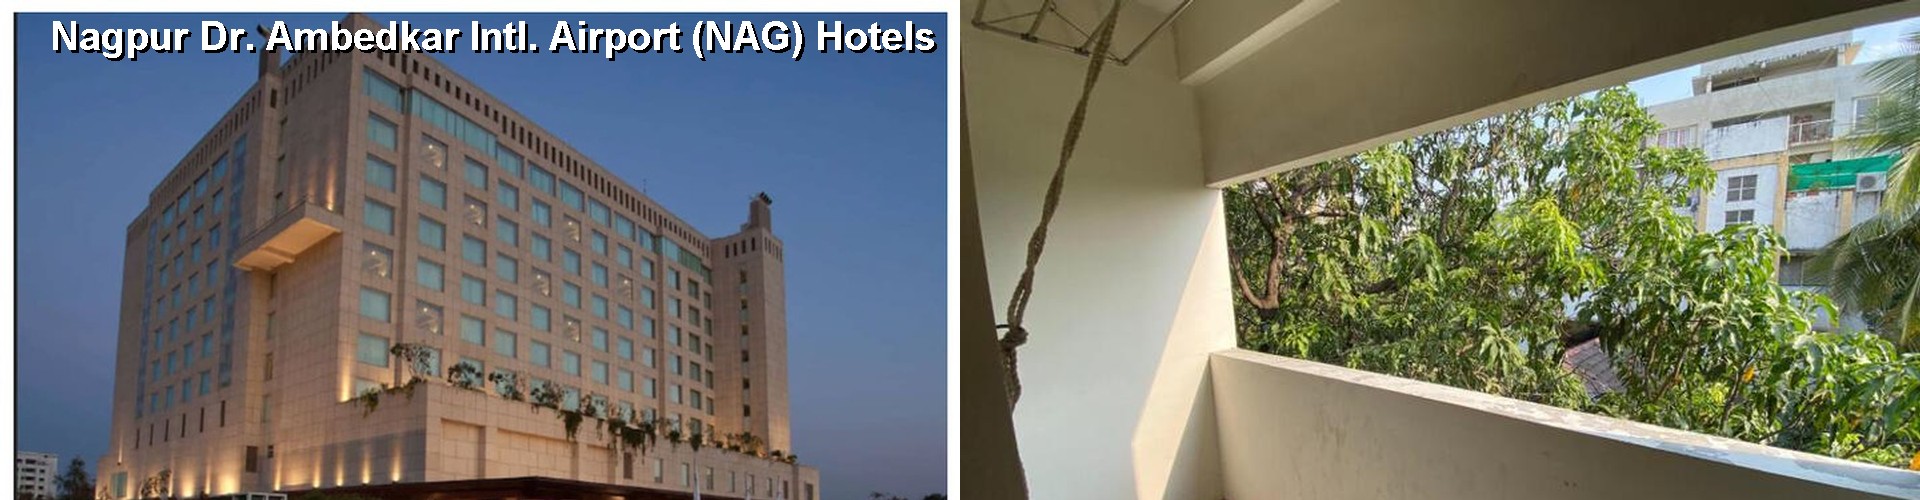 5 Best Hotels near Nagpur Dr. Ambedkar Intl. Airport (NAG)